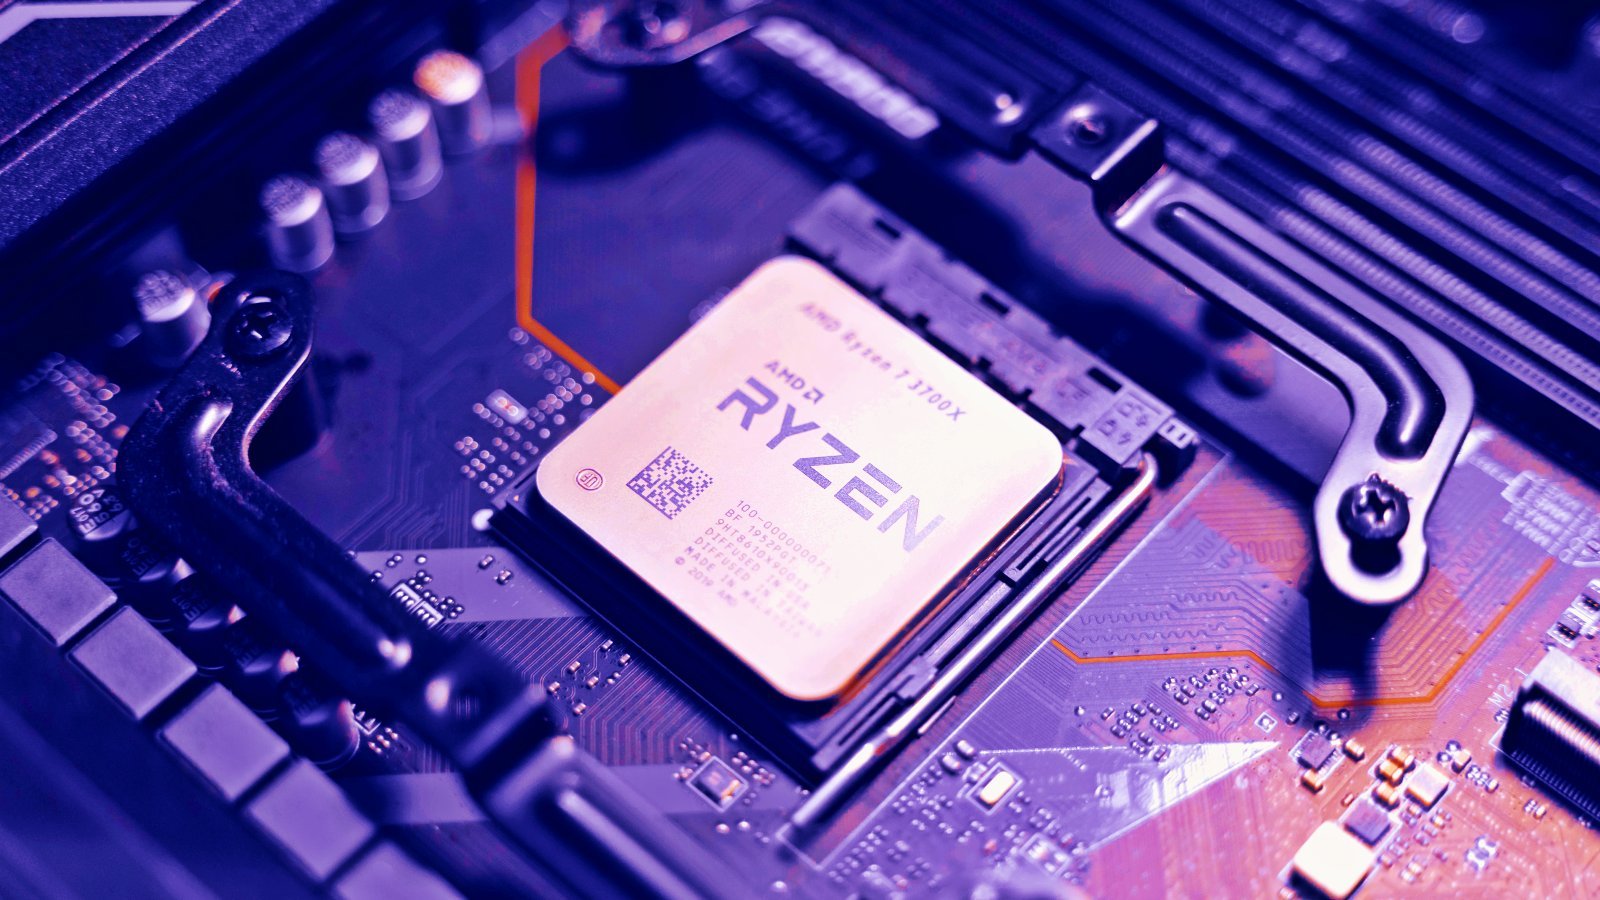 Zenbleed attack leaks sensitive data from AMD Zen2 processors – Source: www.bleepingcomputer.com